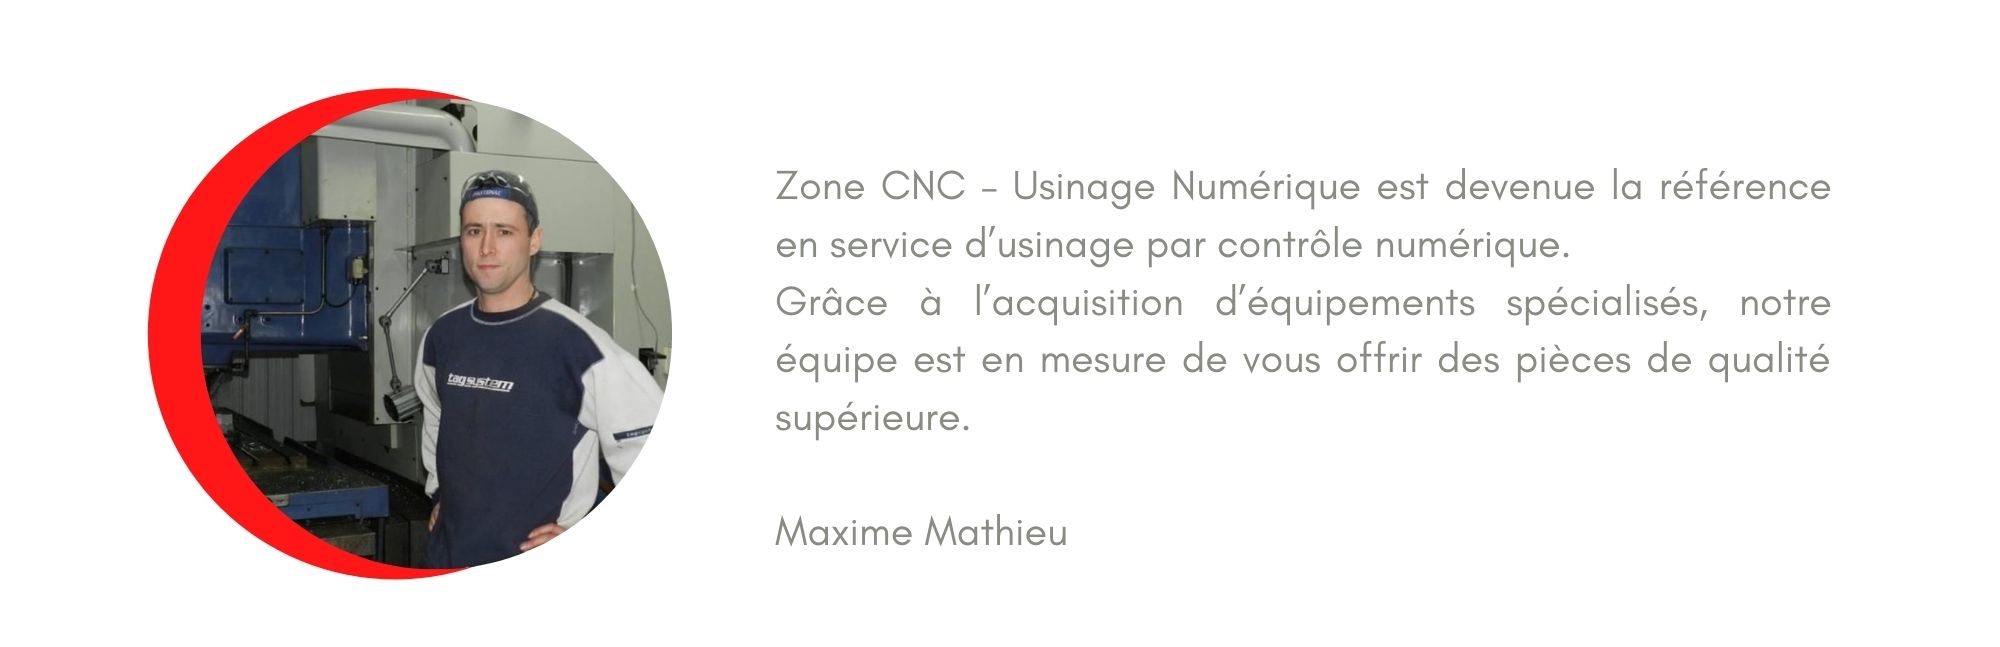 ZONE CNC 10